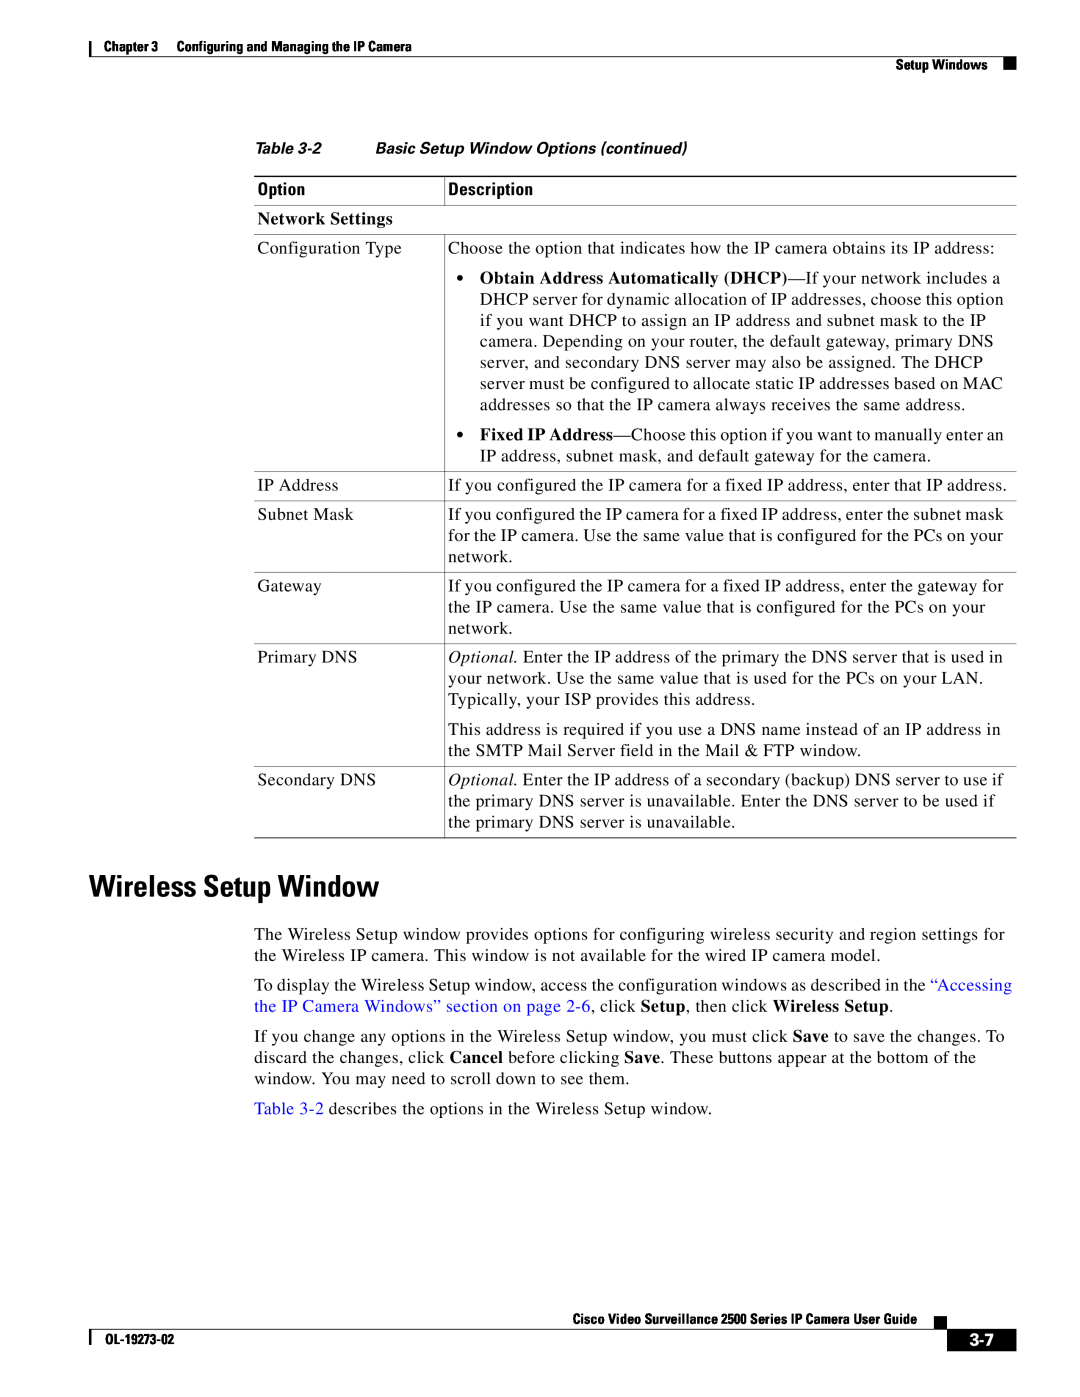 Cisco Systems CIVS-IPC-2500, 2500 Series manual Wireless Setup Window, Network Settings, Option, Description 